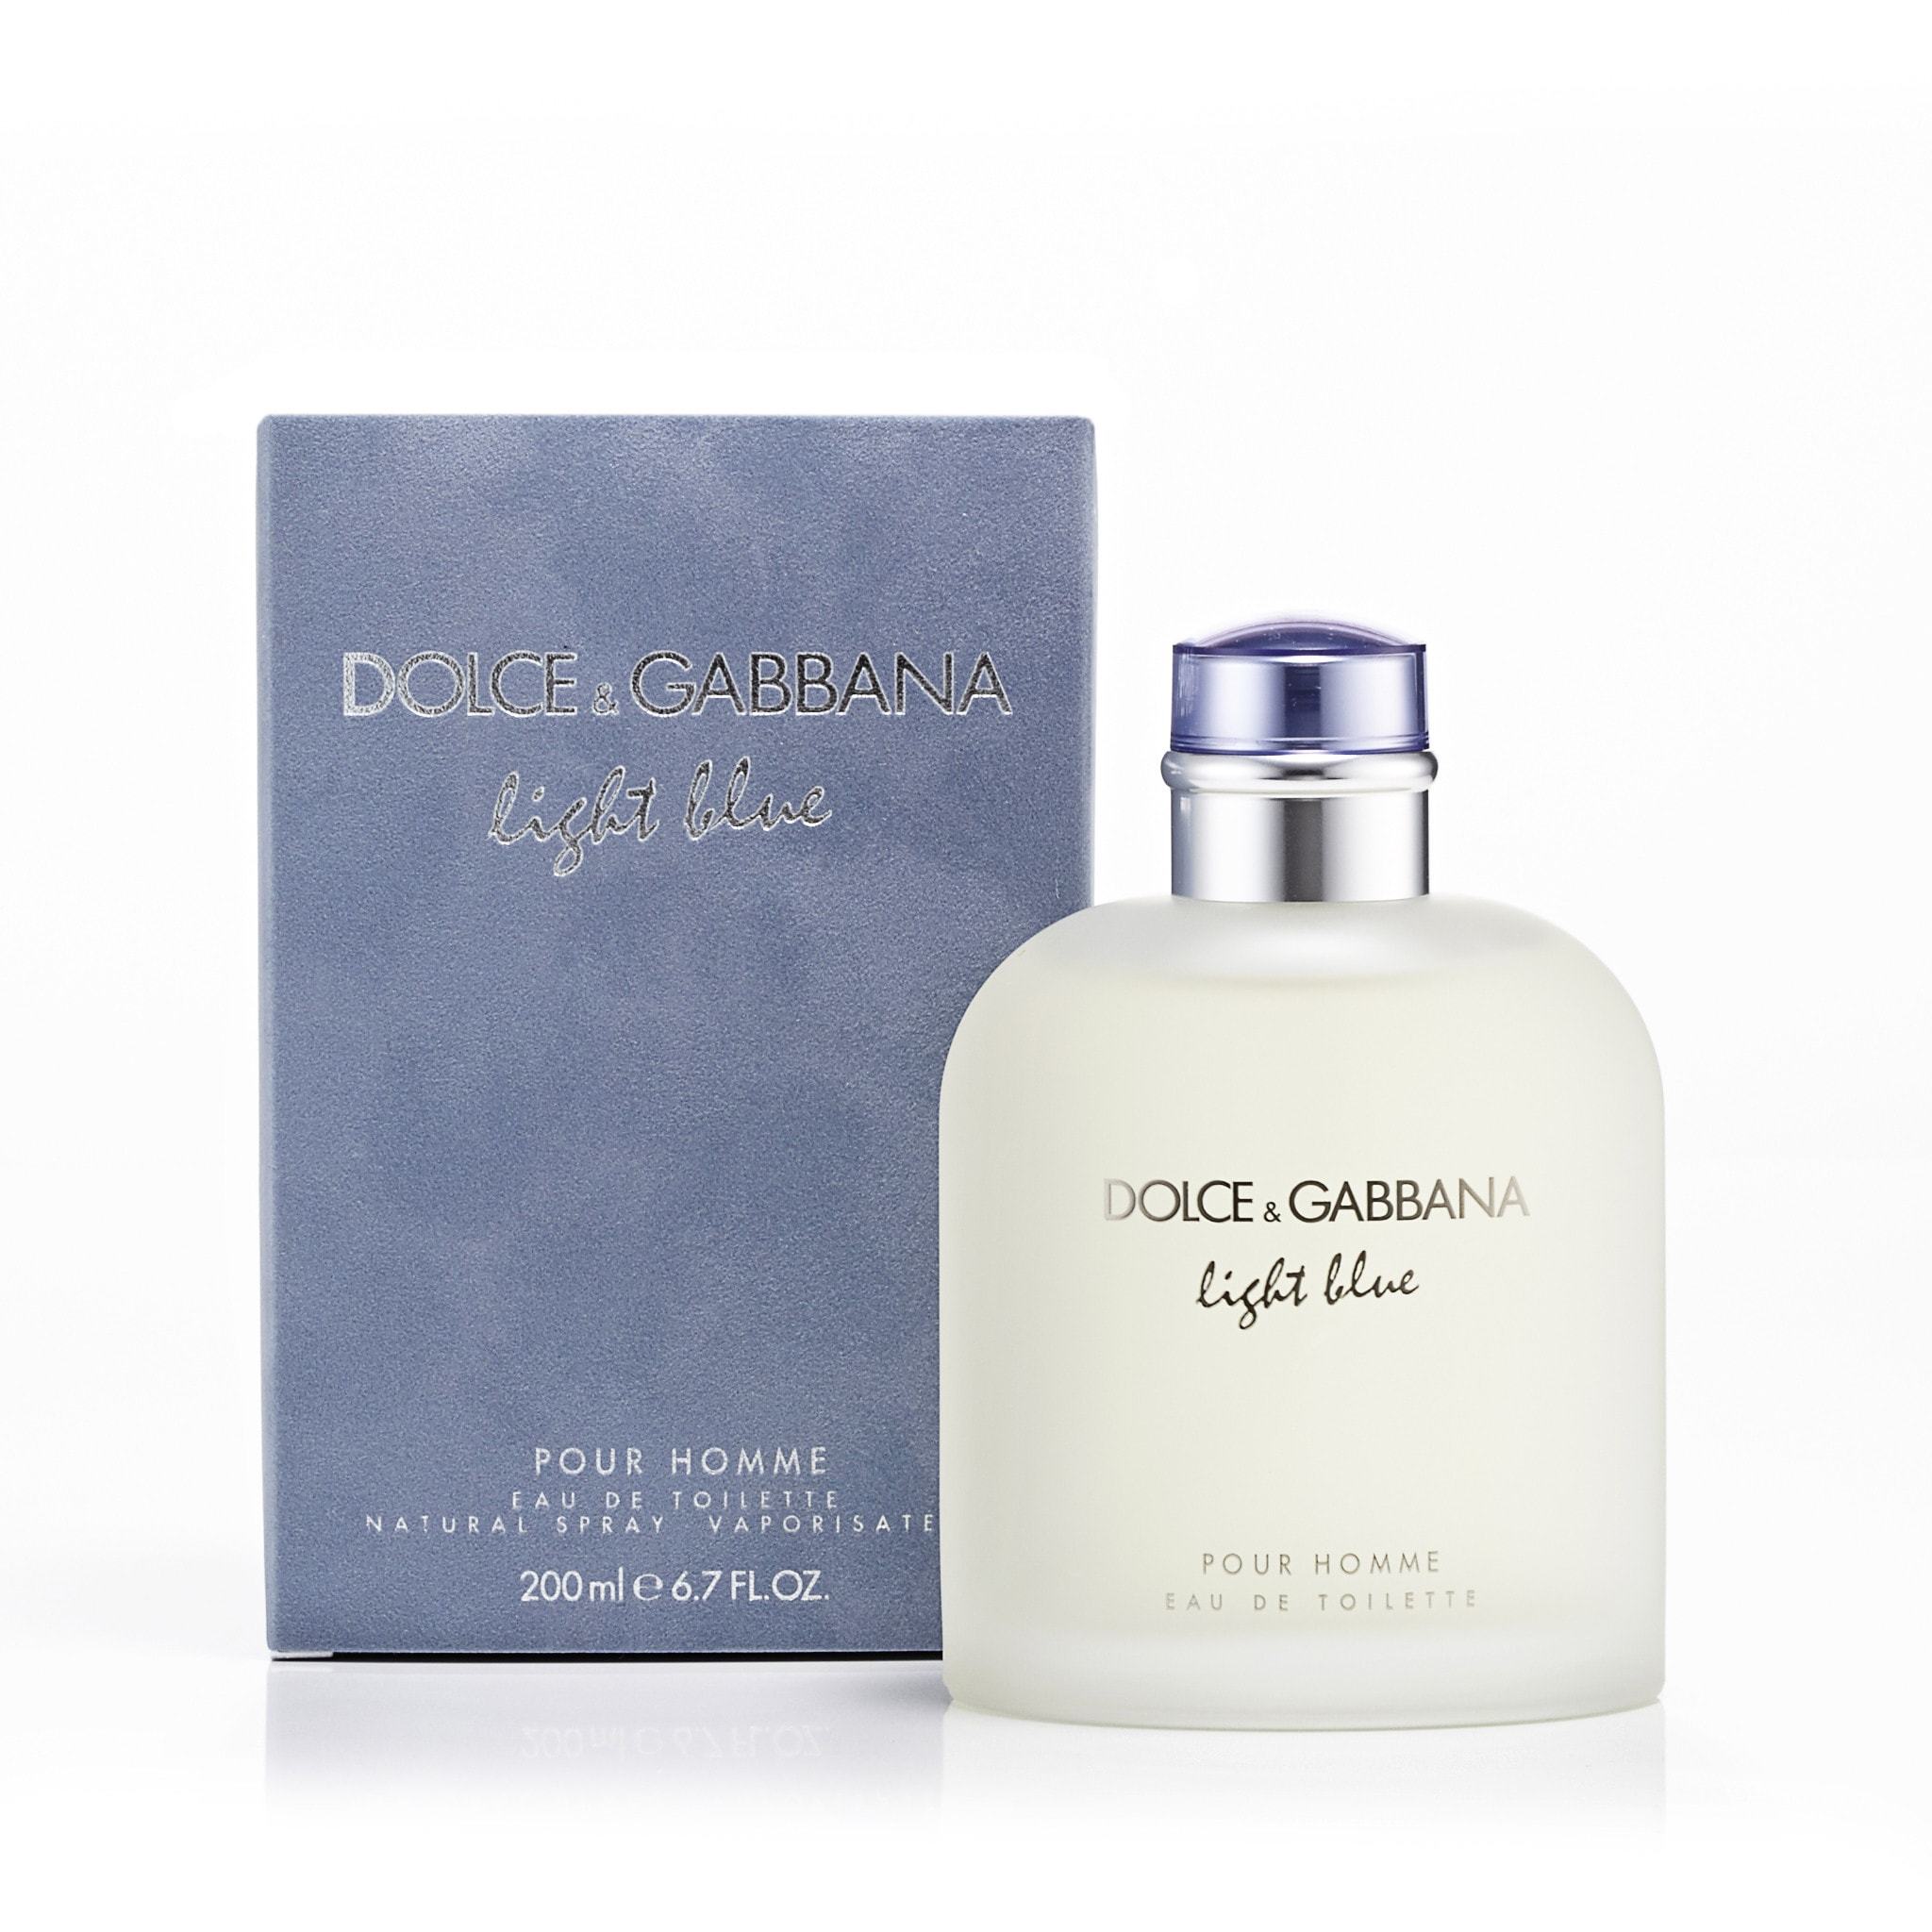 Light Blue Eau Intense by Dolce & Gabbana 6.7 oz Eau de Parfum Spray / Men